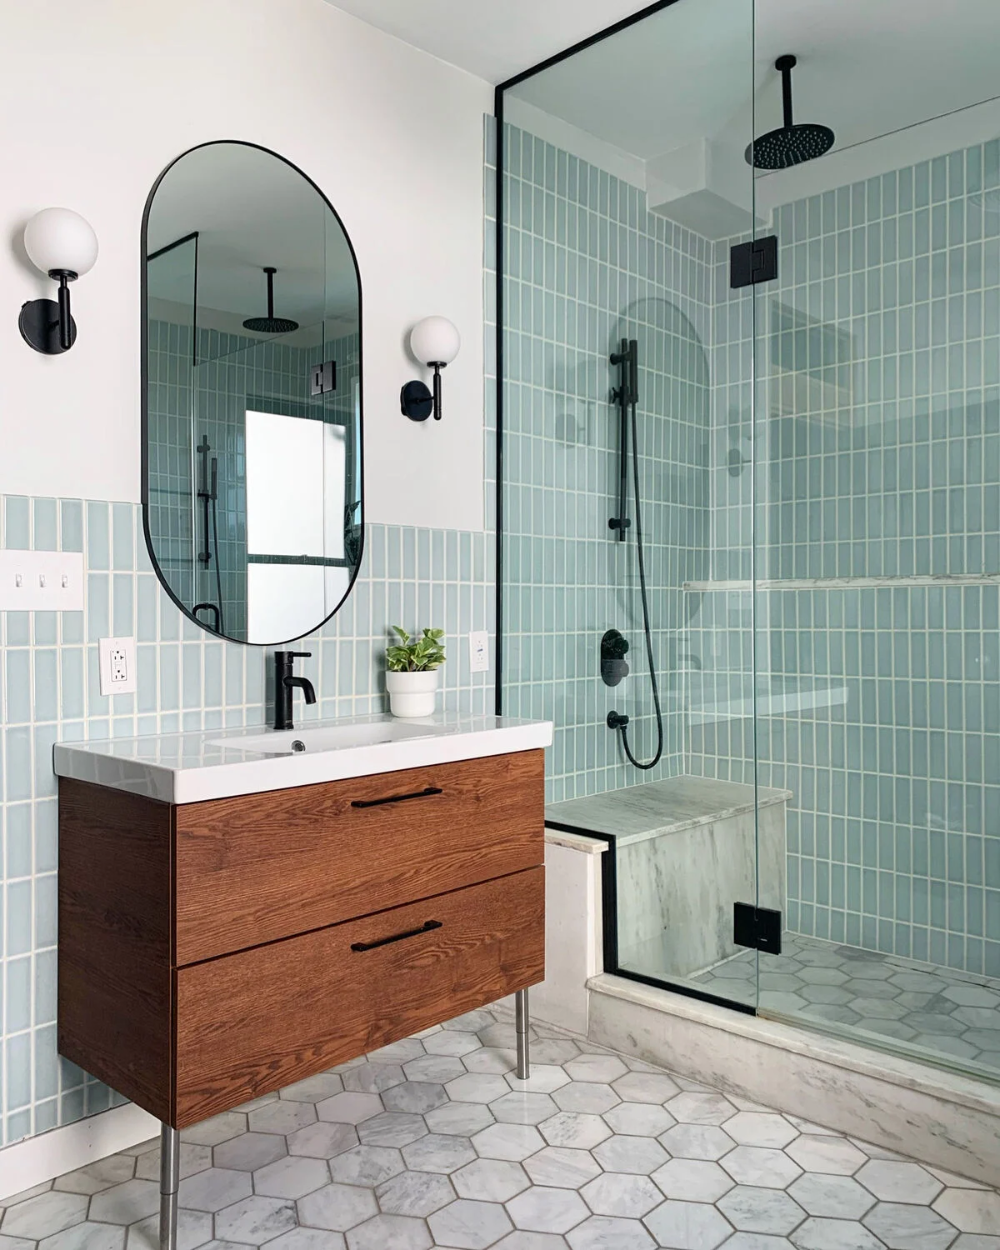 3 handy tips for choosing bathroom tiles